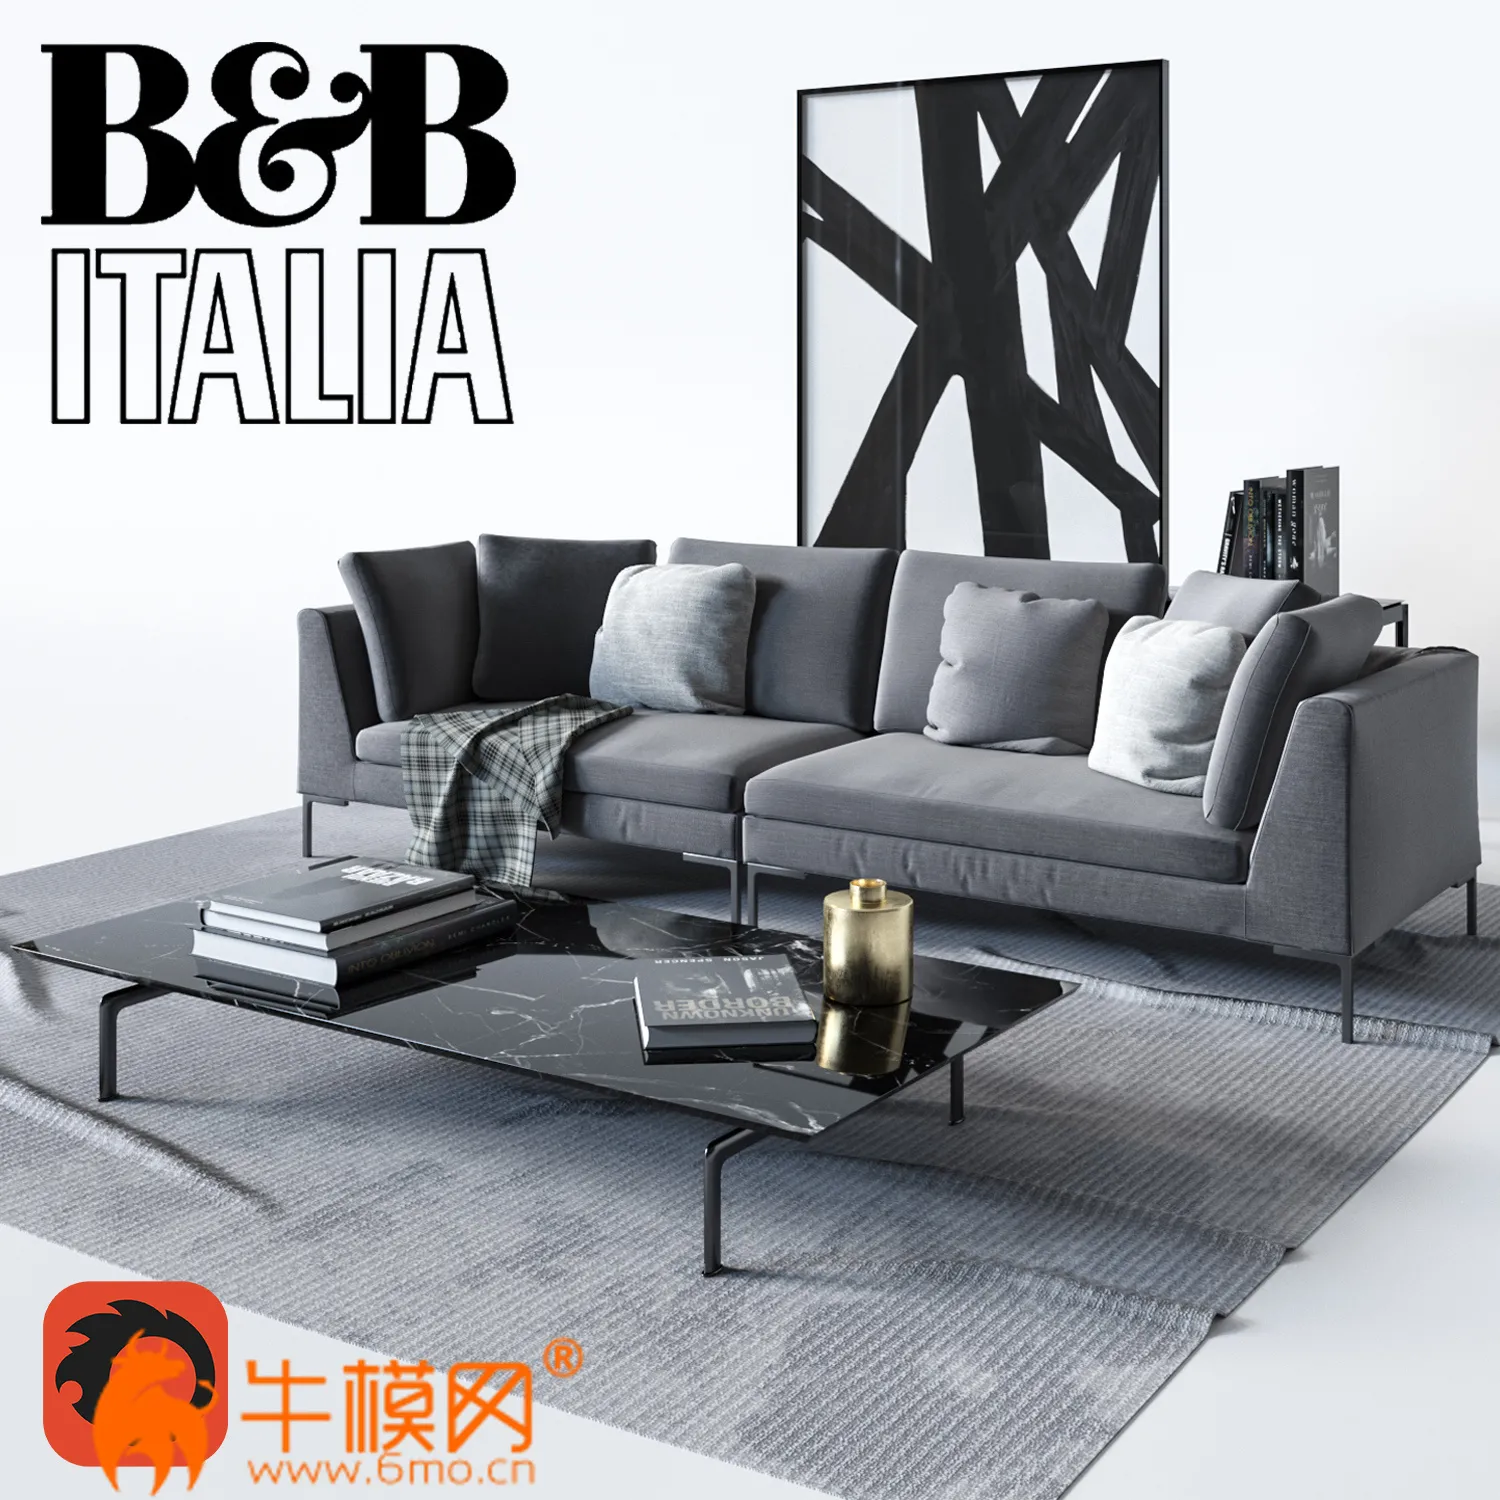 B and B Italia Sofa Charles – 5900